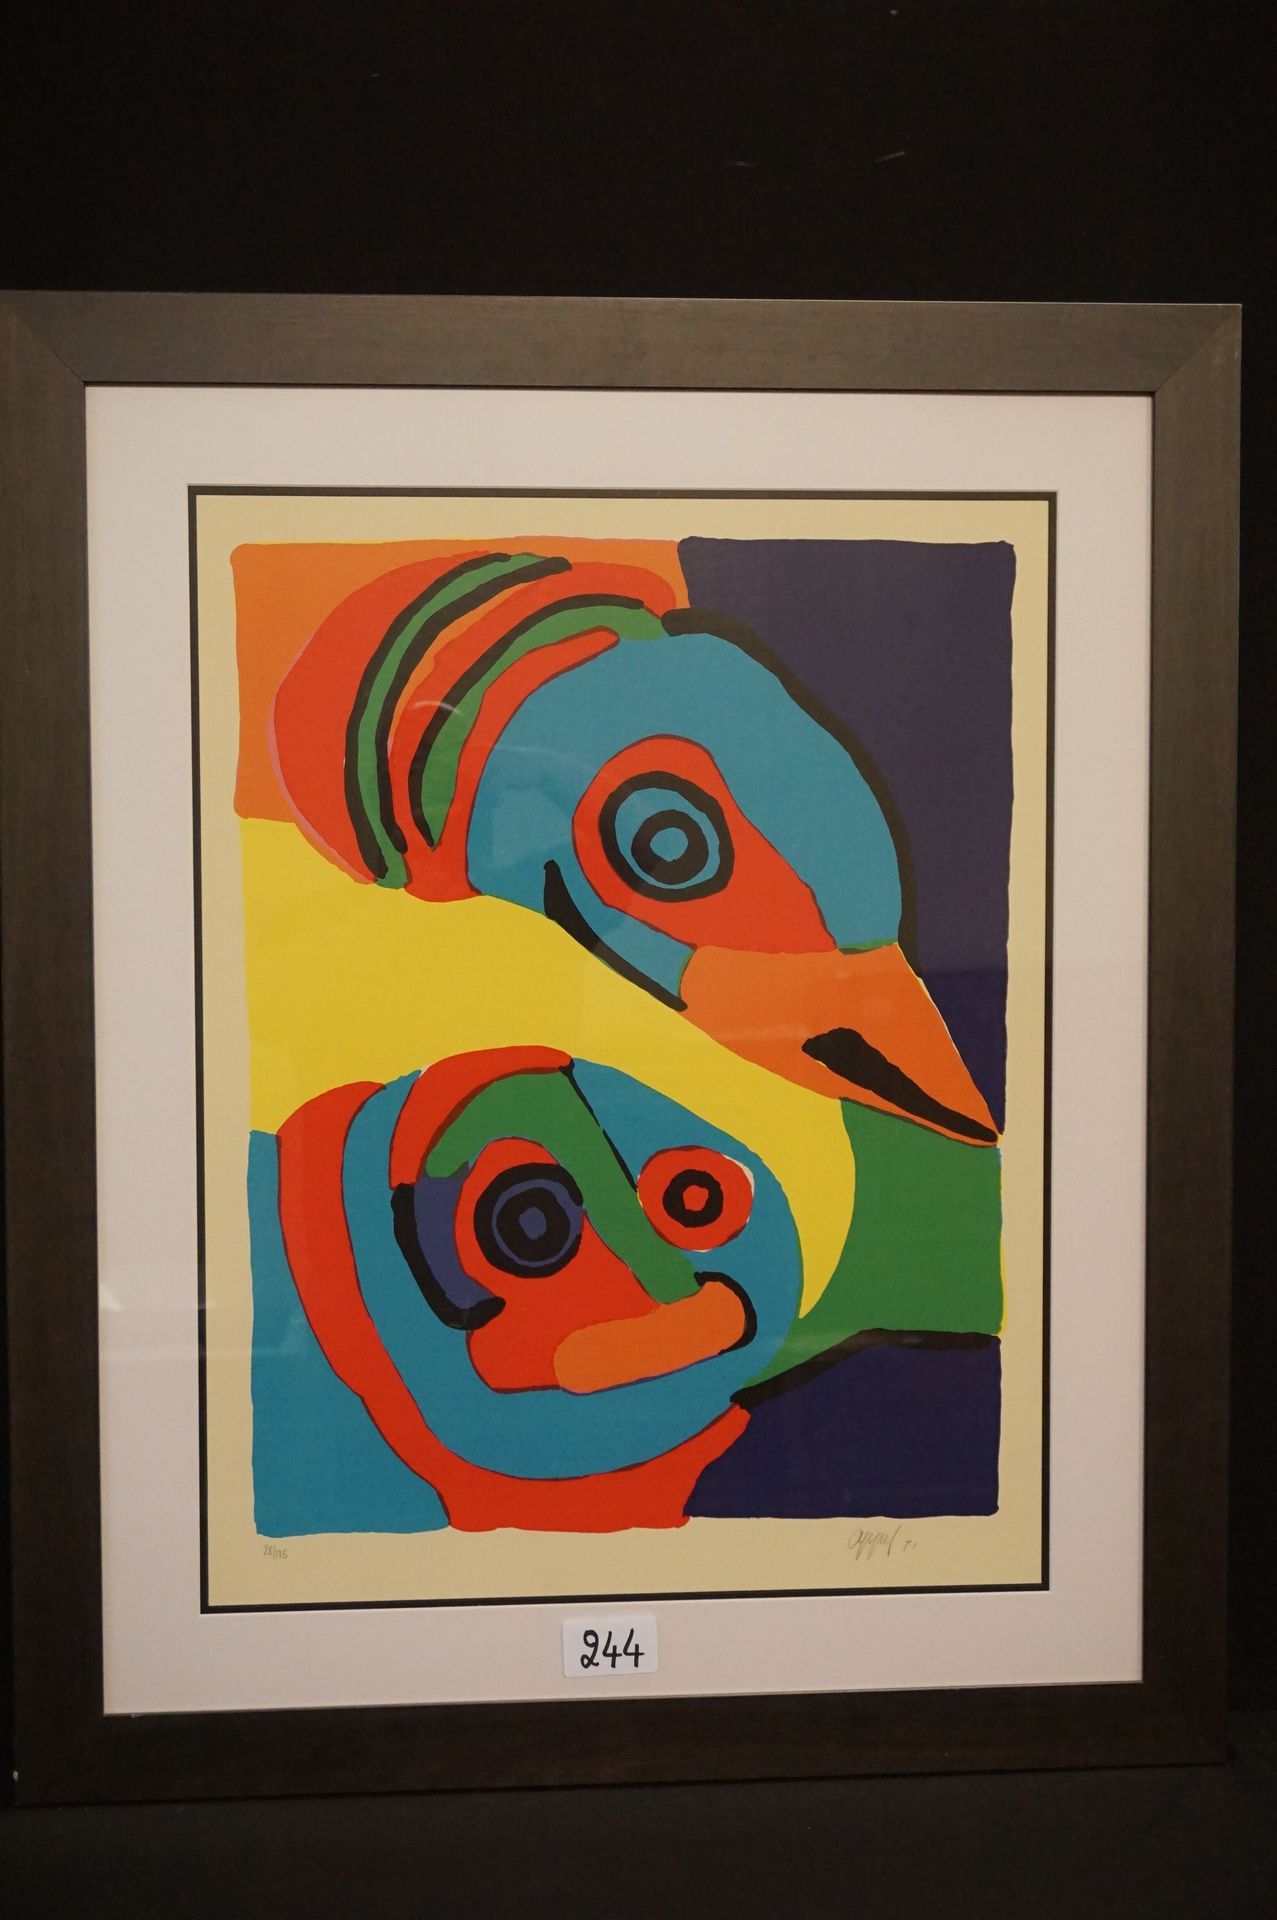 KAREL APPEL (1921 - 2006) "眼镜蛇的构成"--石版画--签名和日期为1971年--编号为28/125--66 x 50厘米